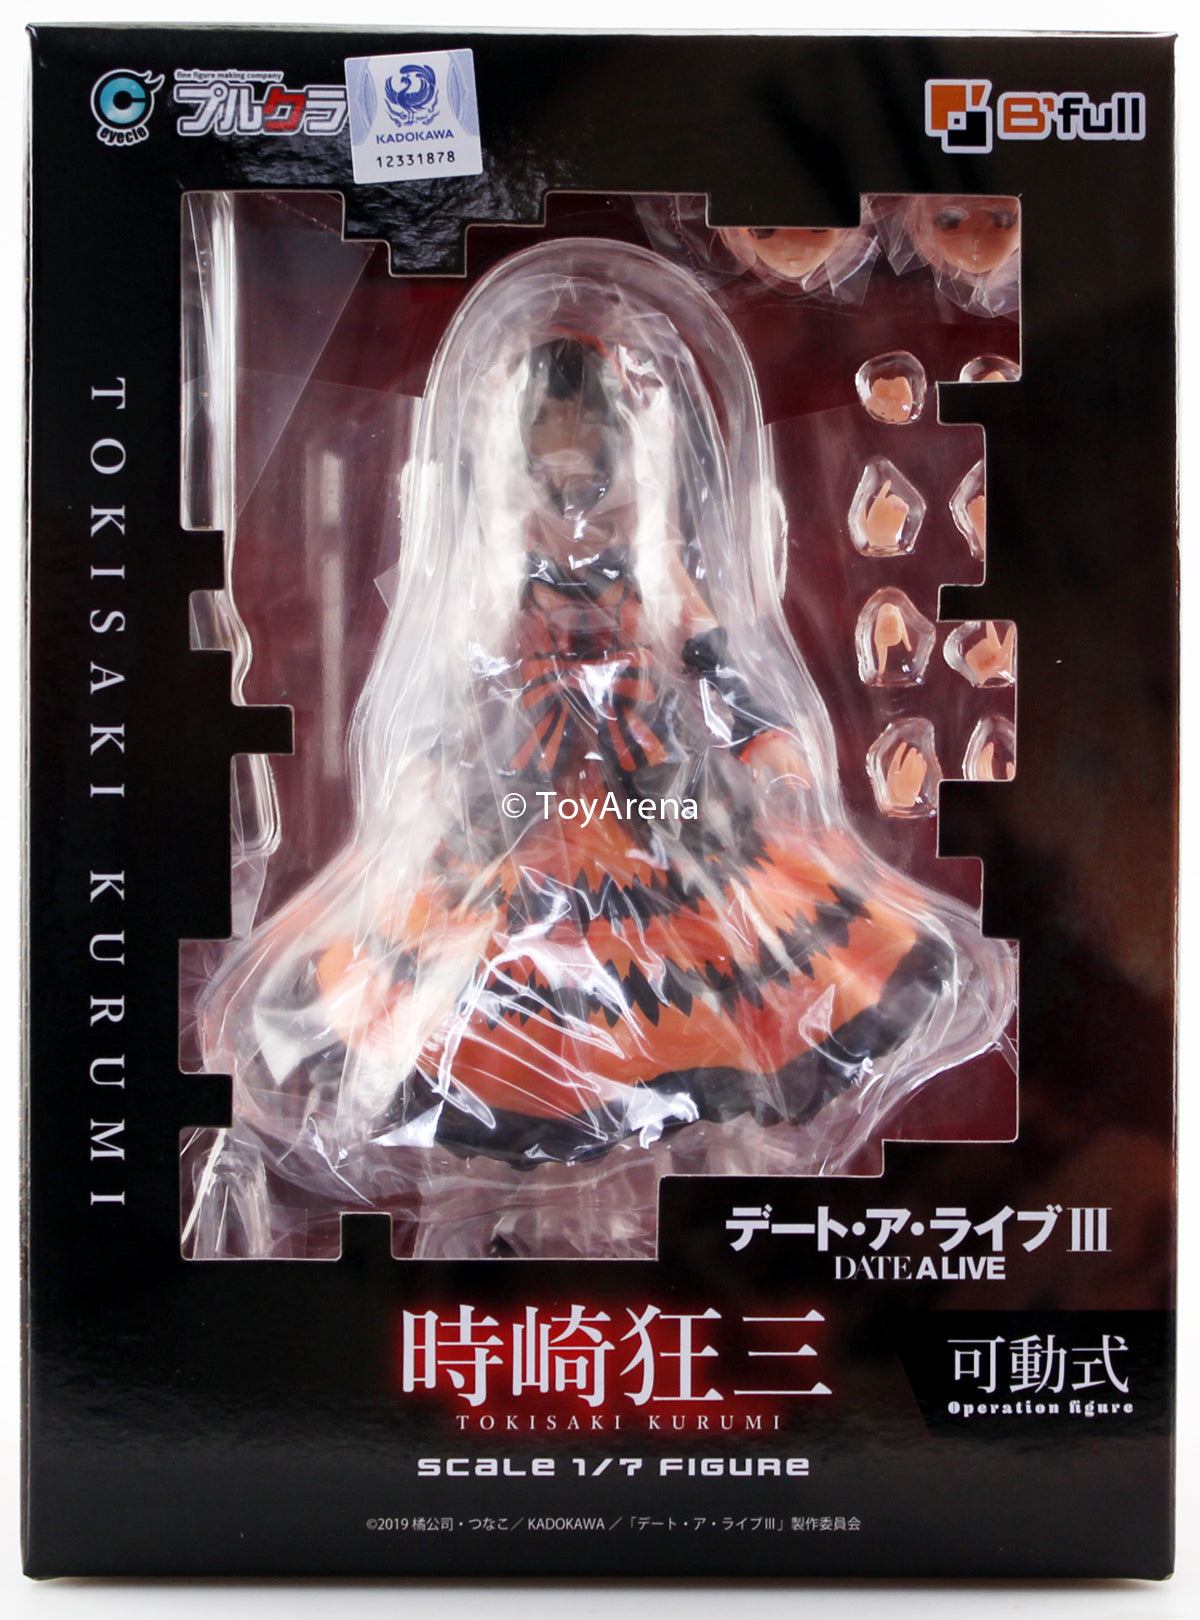 Pulchra Kurumi Tokisaki Date A Live III 1/7 Scale Posable Statue Figure